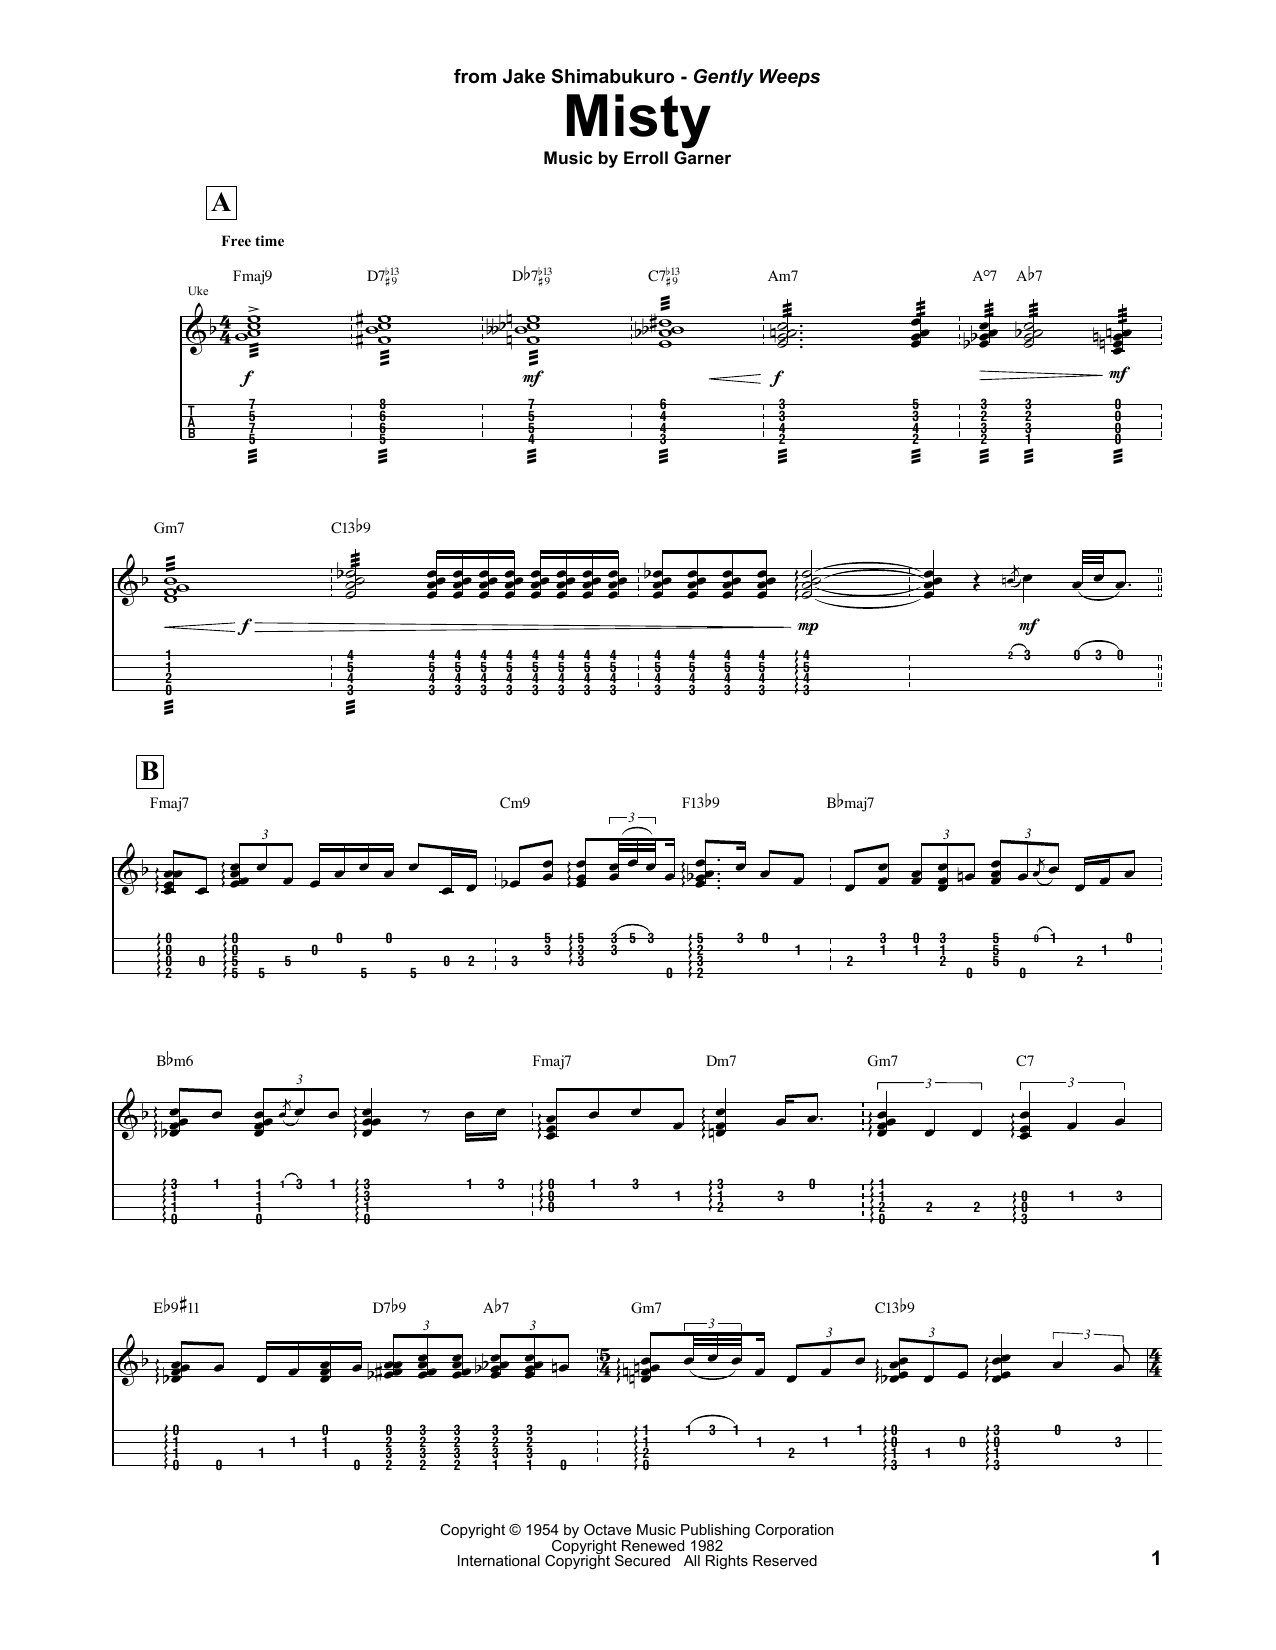 Download Jake Shimabukuro Misty Sheet Music and learn how to play UKETAB PDF digital score in minutes